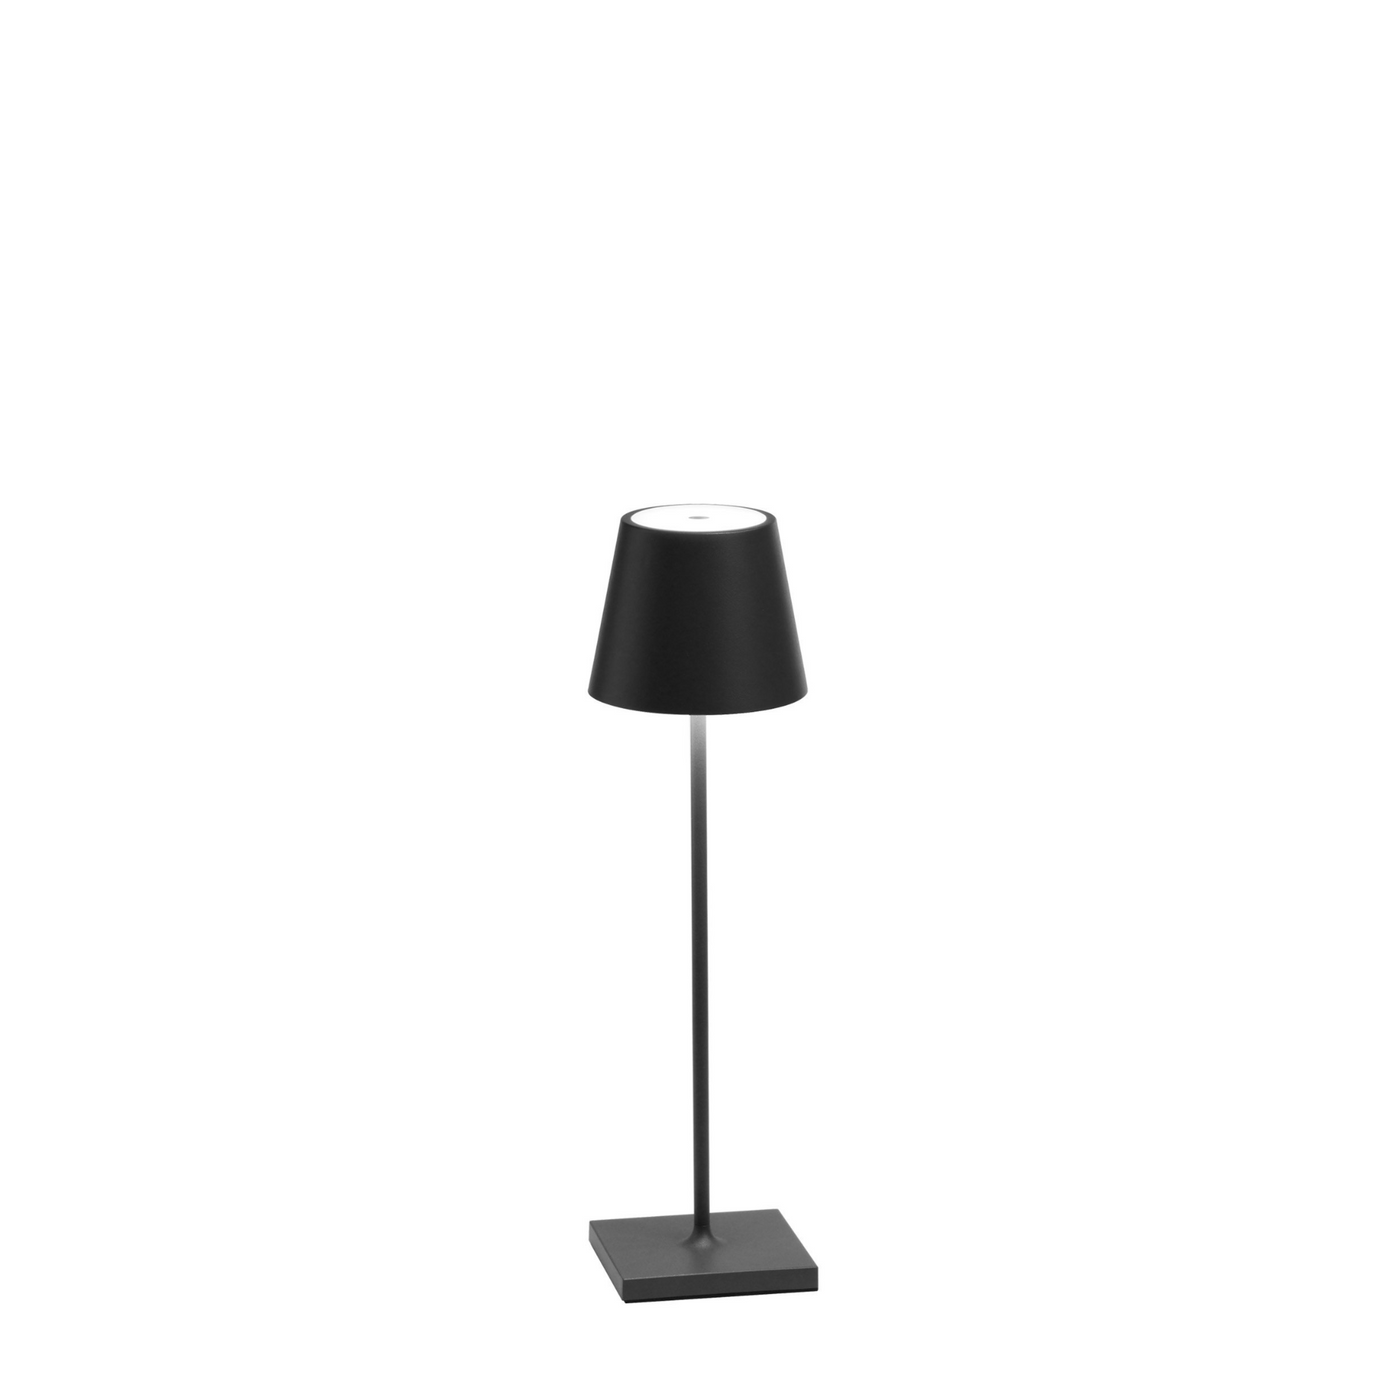 Poldina Pro Cordless Table Lamp | Newport Lamp And Shade | Located in Newport, RI